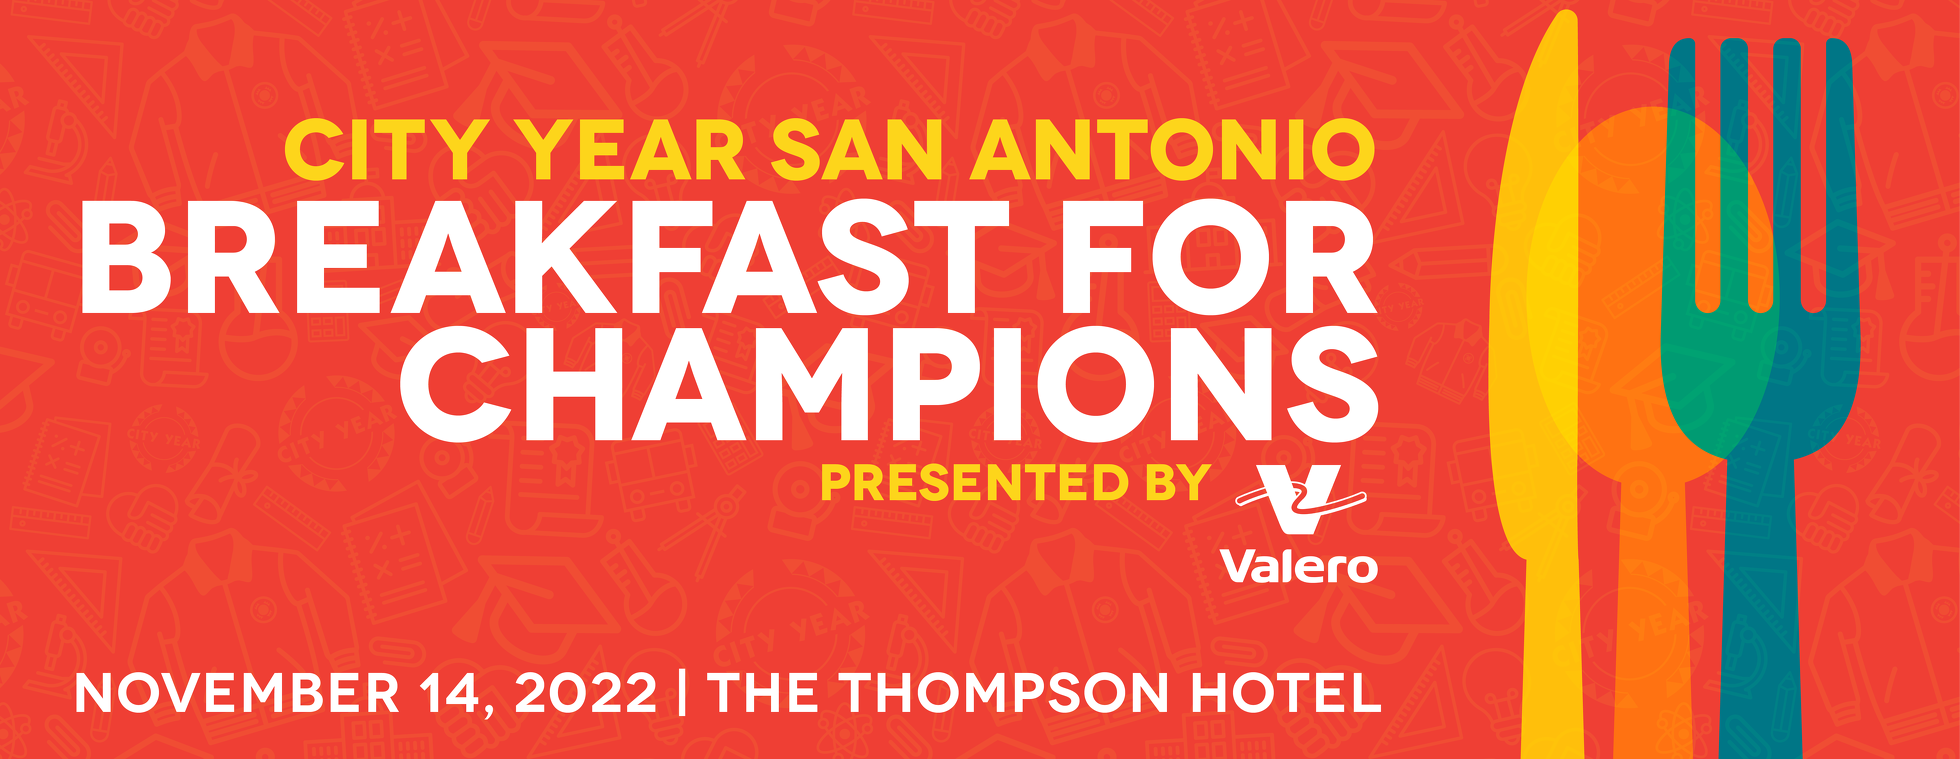 City Year San Antonio's Breakfast for Champions Event